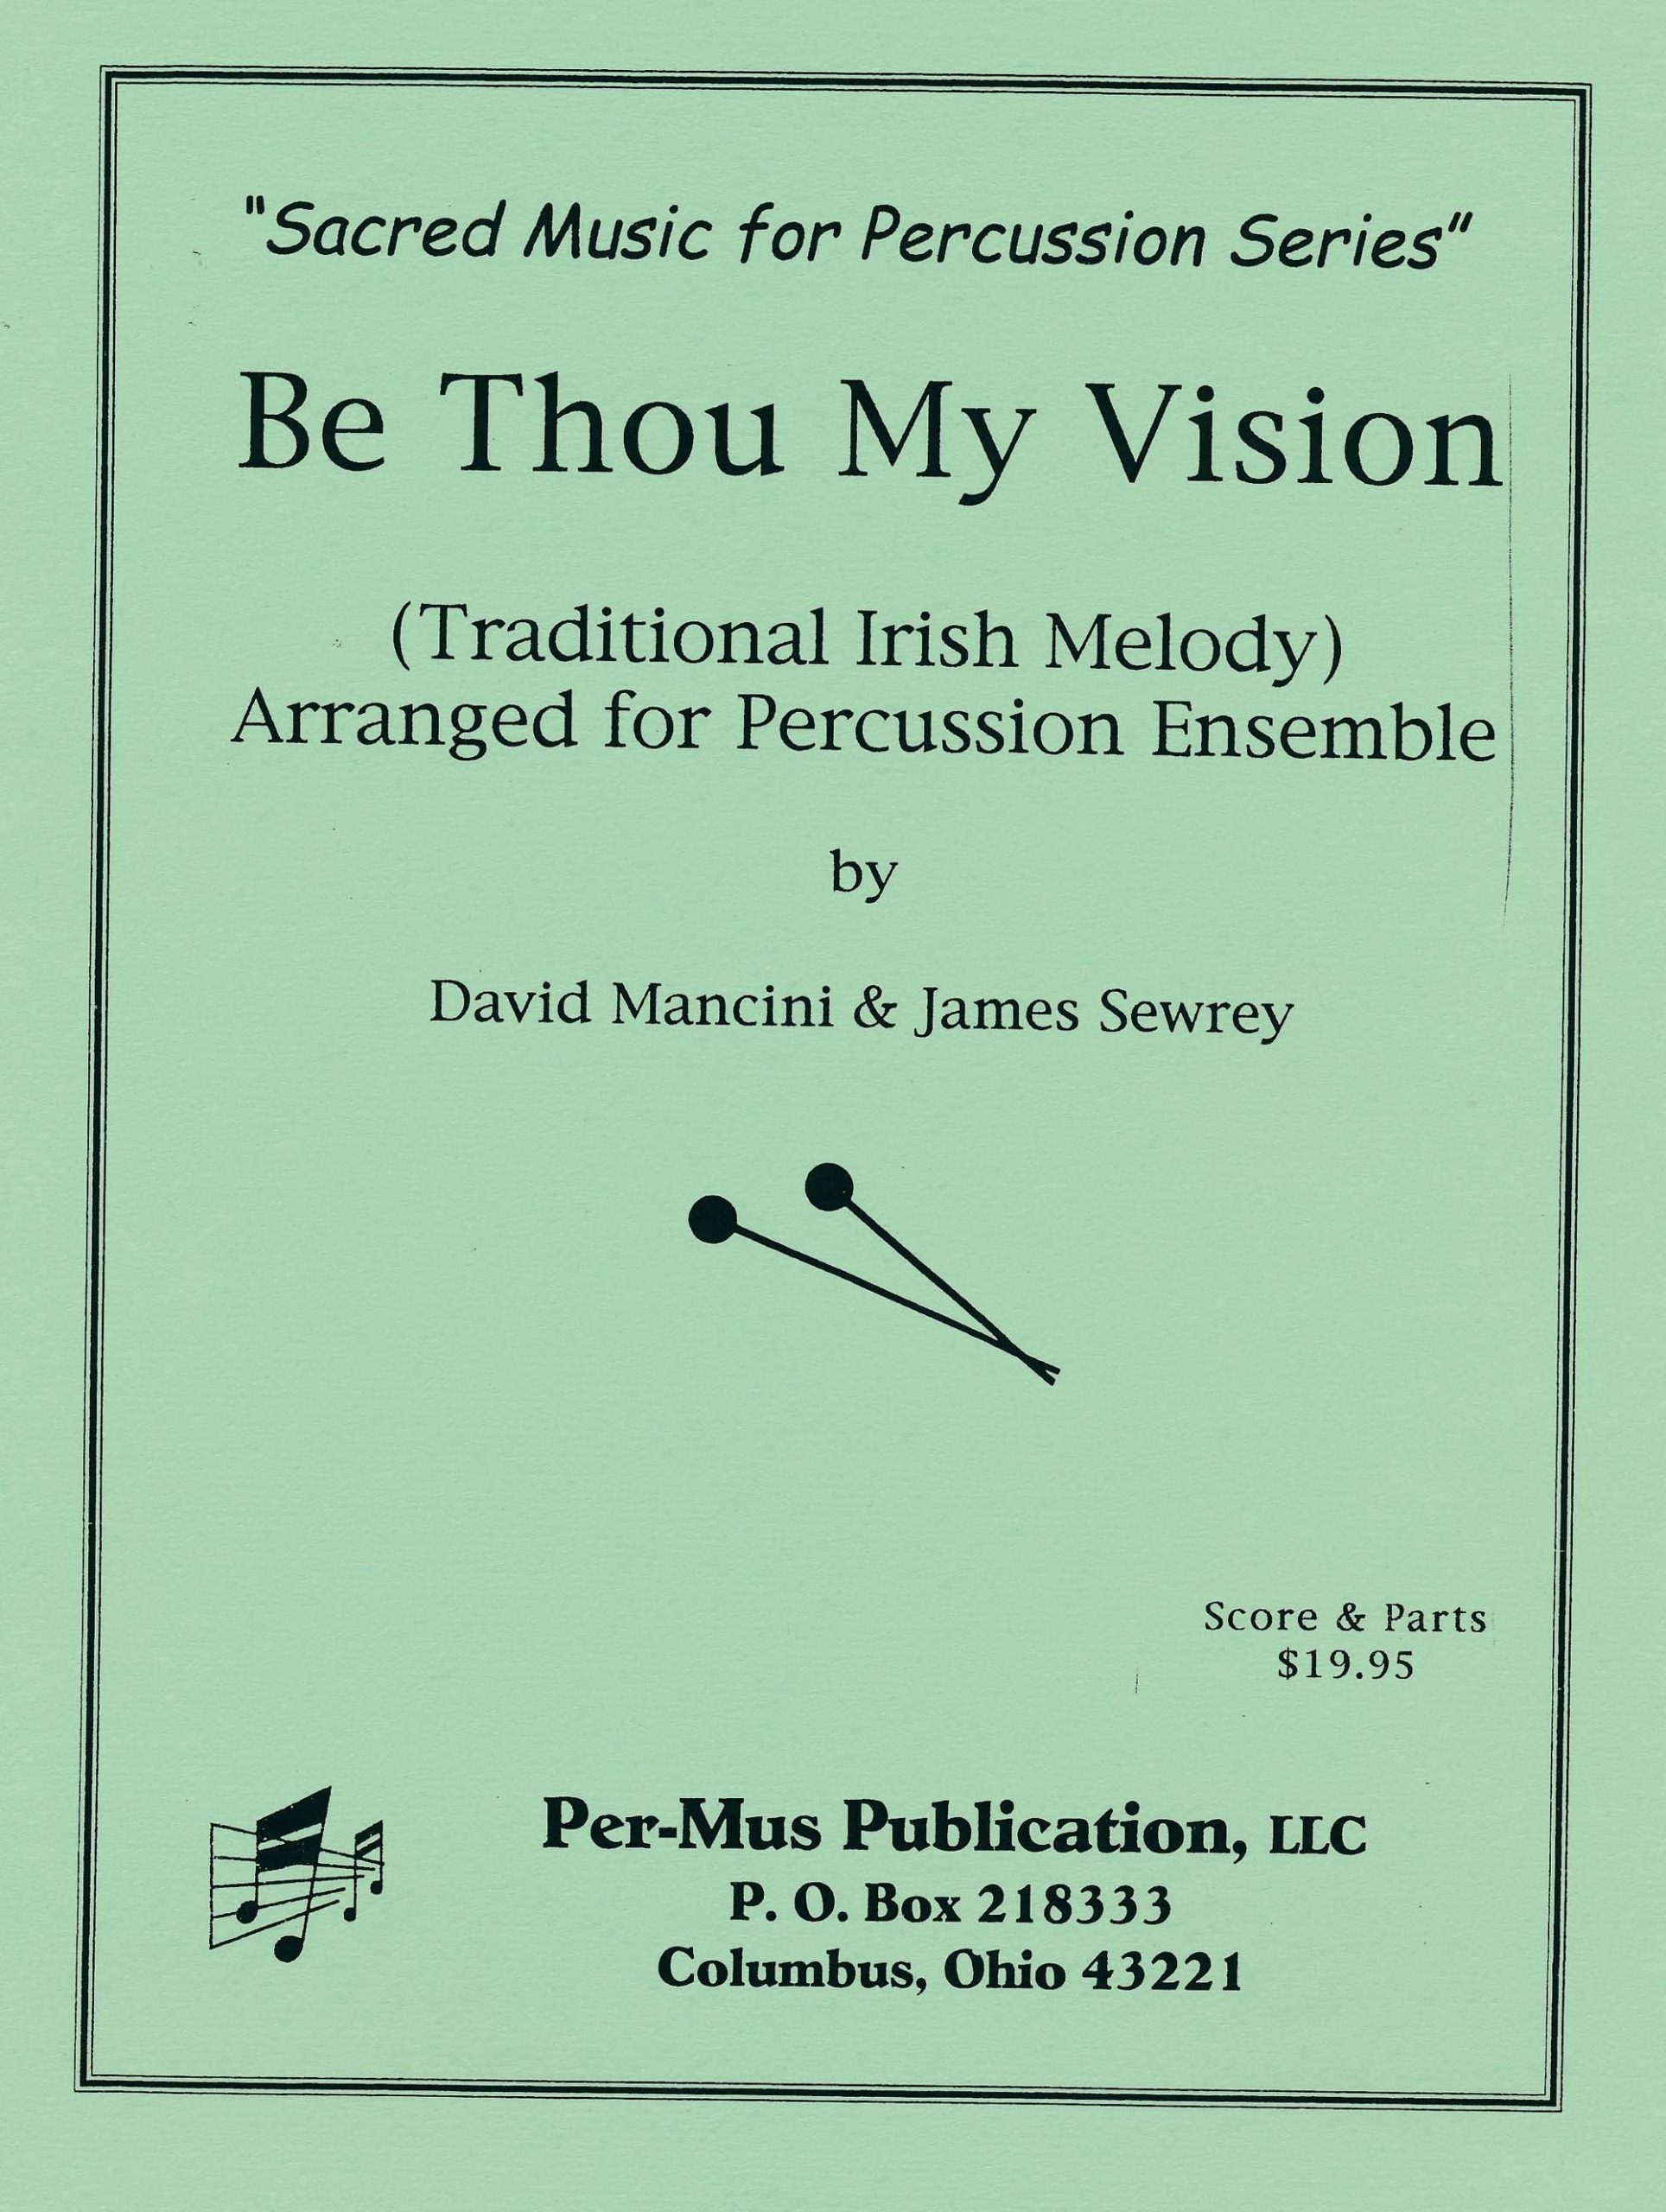 Be Thou My Vision arr. David Mancini & James Sewrey